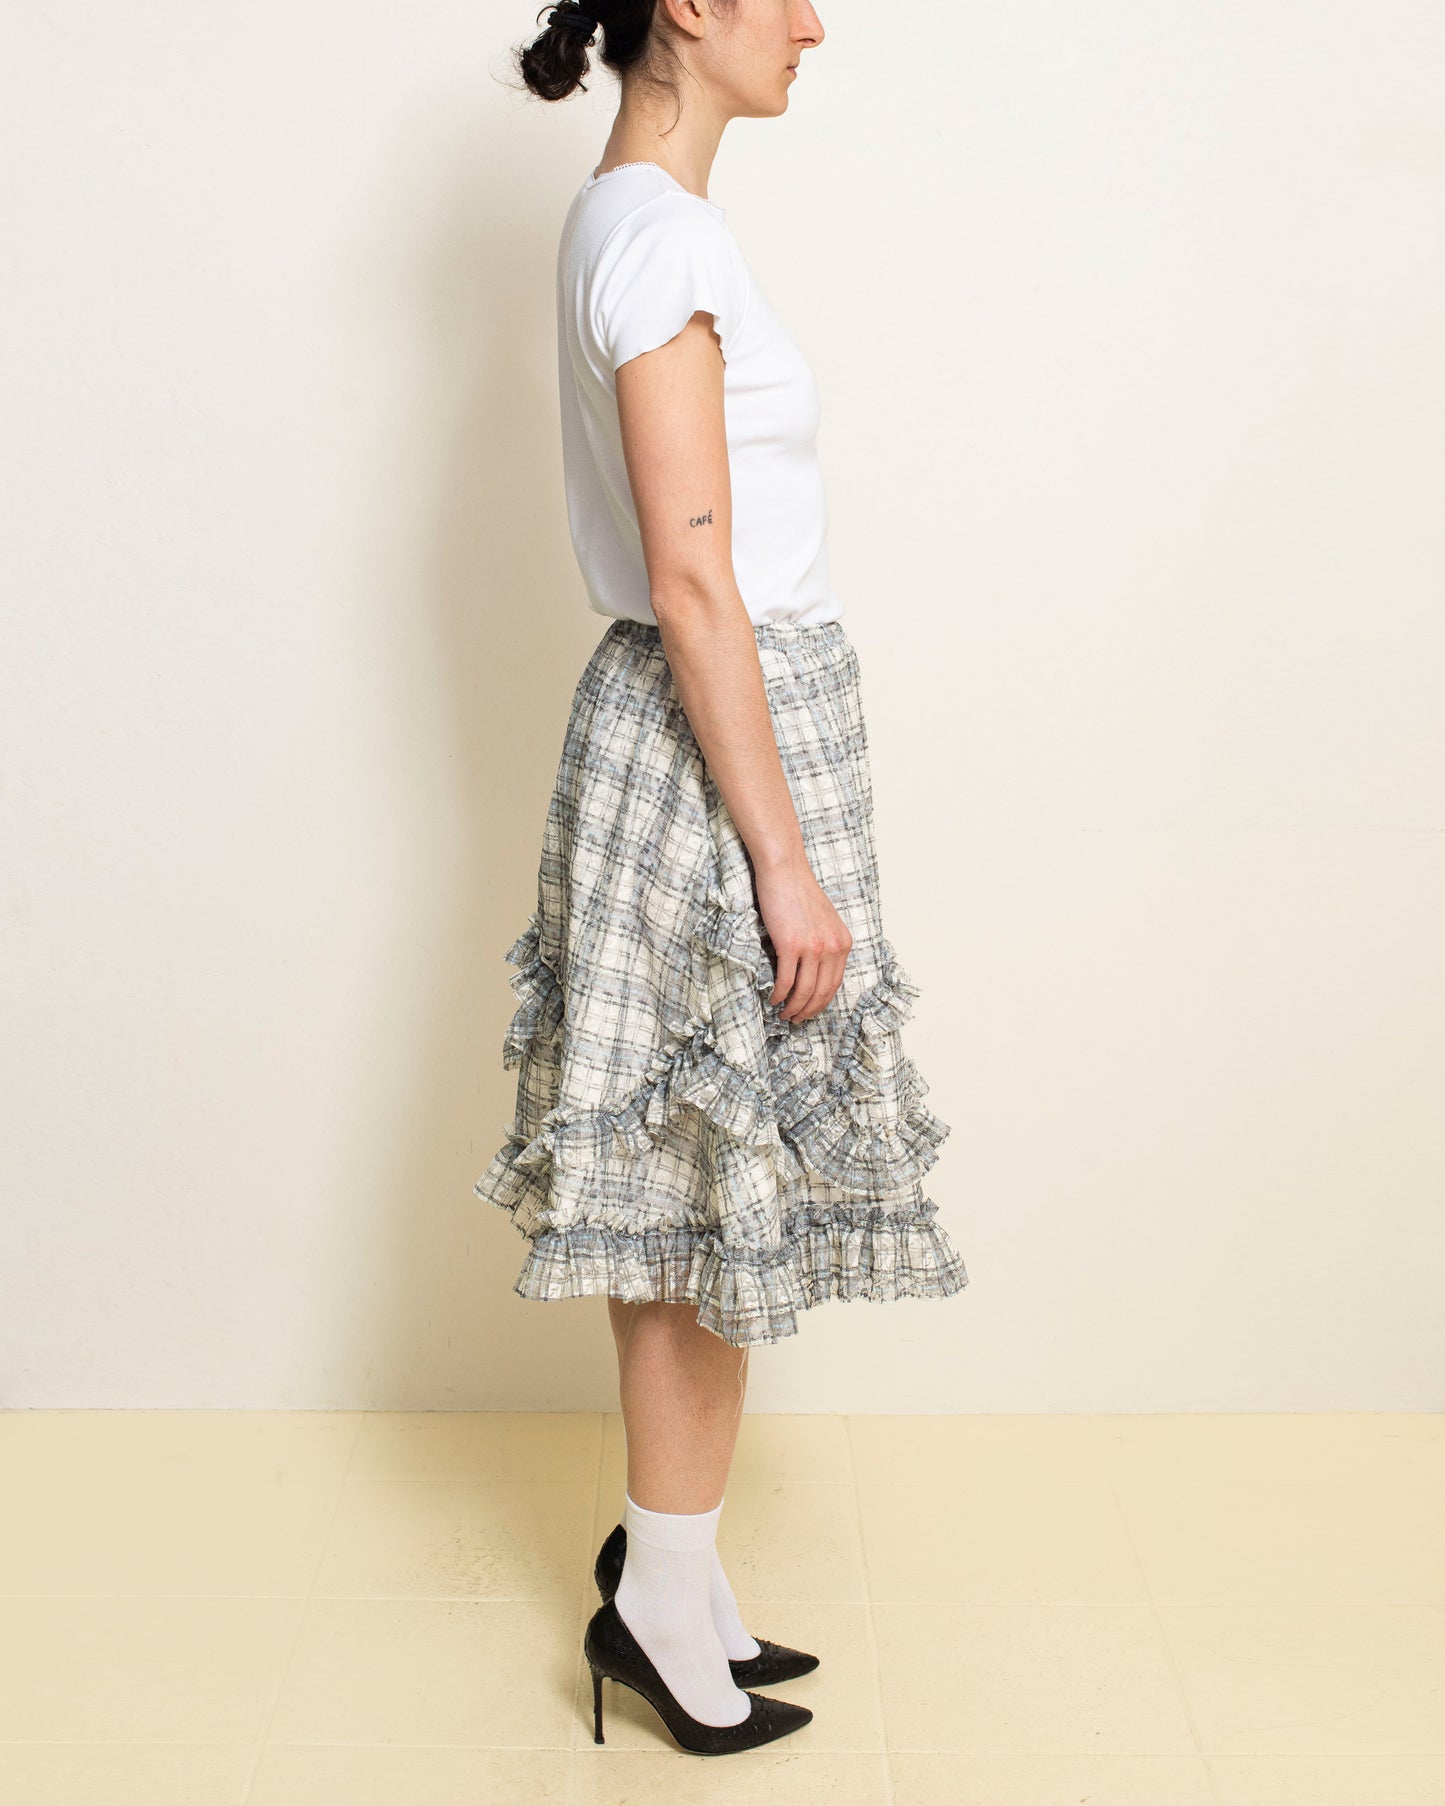 yushokobayashi - Check Lace Skirt